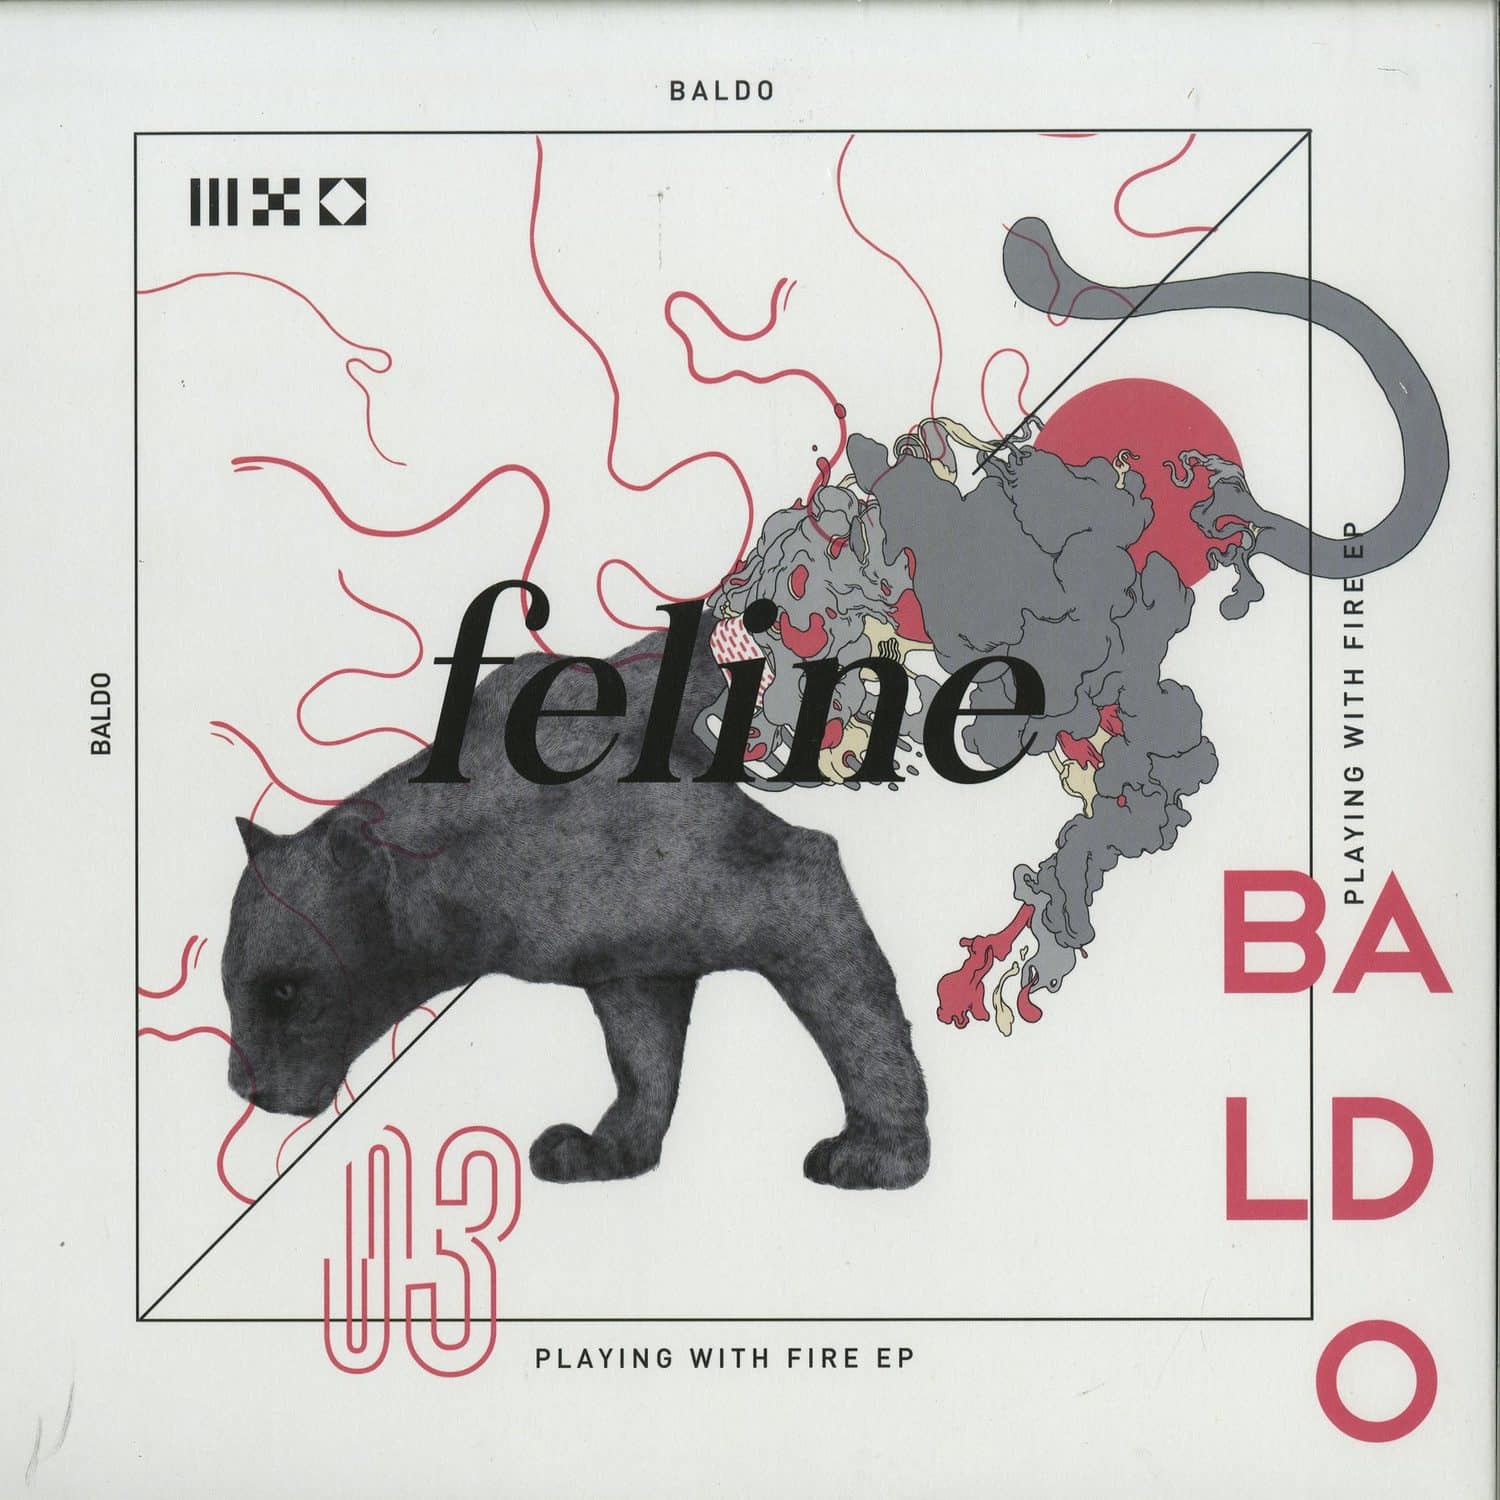 Baldo - PLAYING WITH FIRE EP